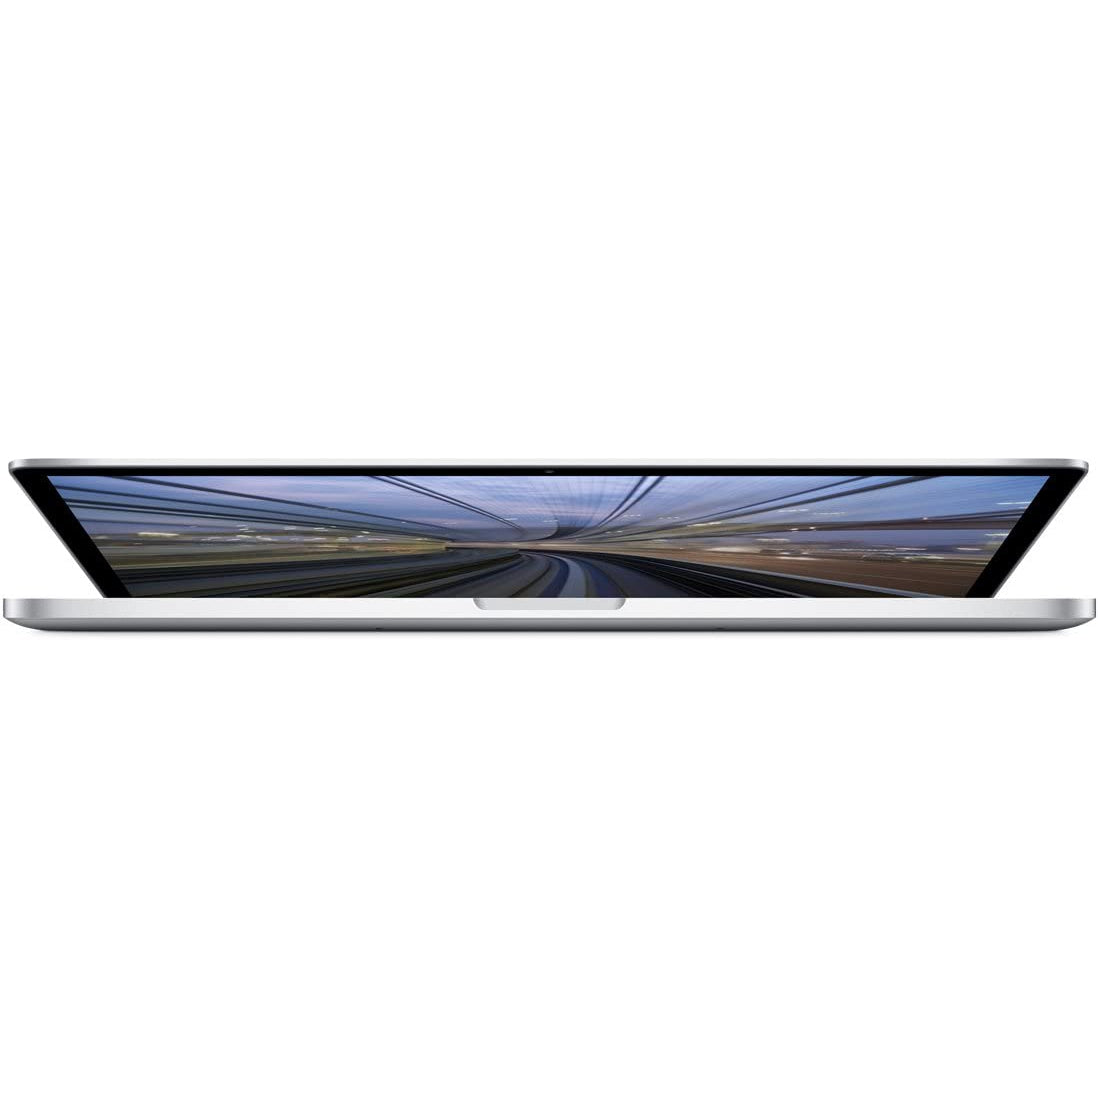 Apple MacBook Pro 13.3'' MF840LL/A (2015) Intel Core i5, 8GB RAM 256GB SSD- Silver - Refurbished Excellent